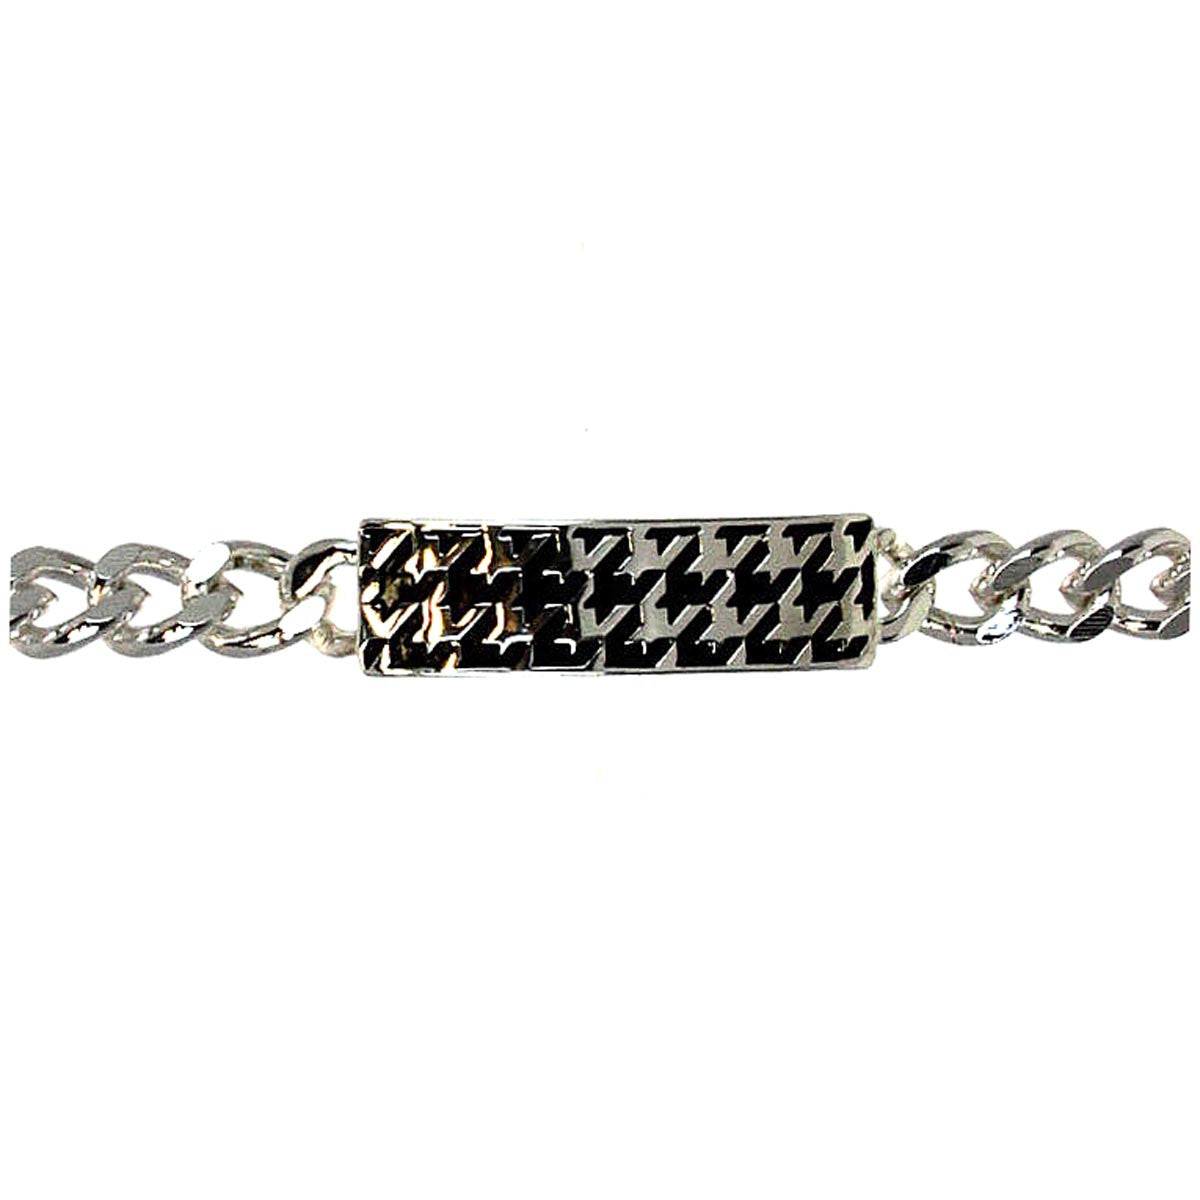 Houndstooth Bracelet Chain